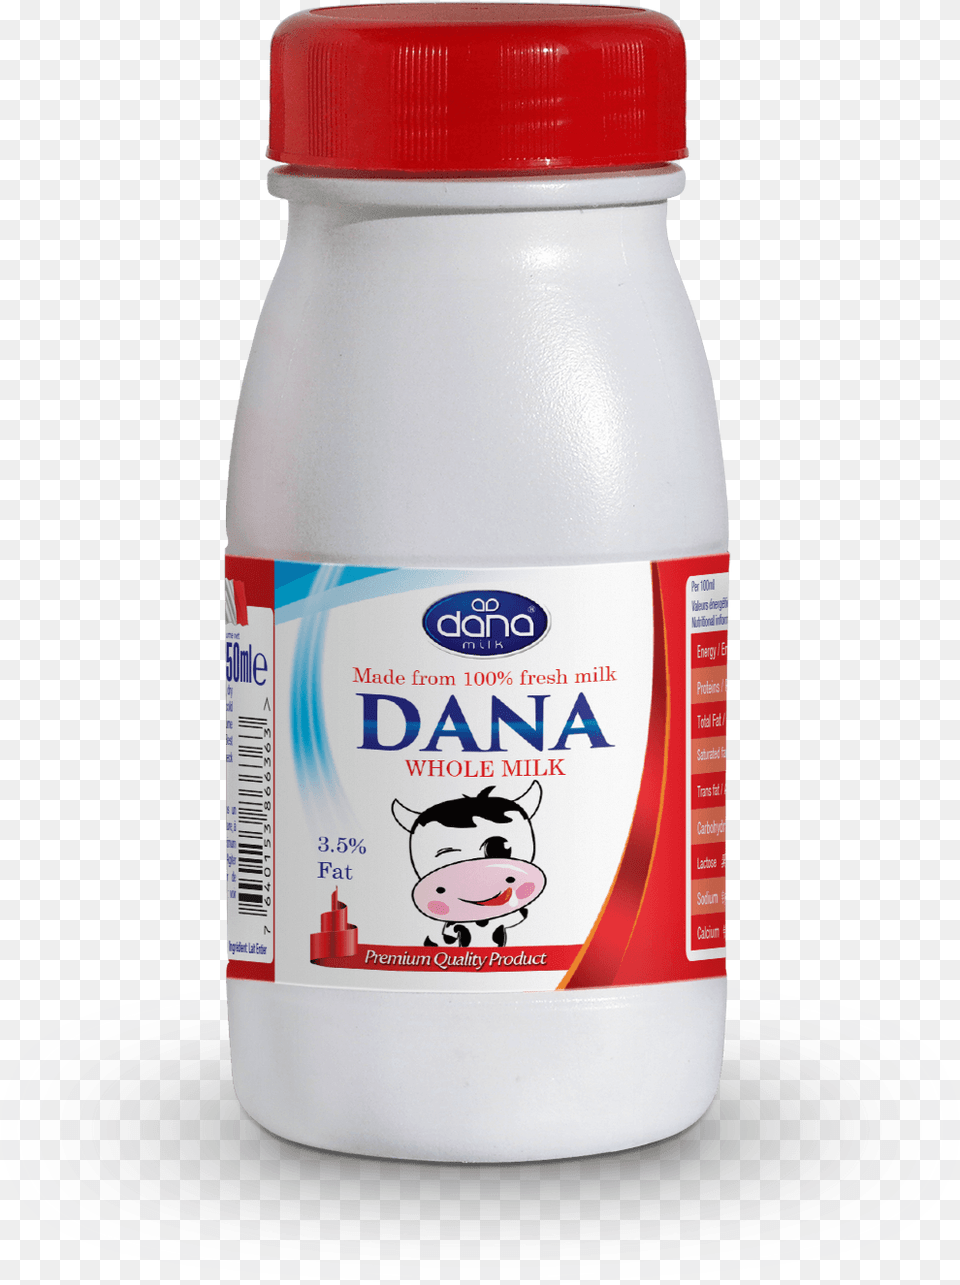 Dana Uht Milk In Plastic Bottles Hdpe Uht Milk Bottles, Dessert, Food, Yogurt, Mayonnaise Png Image